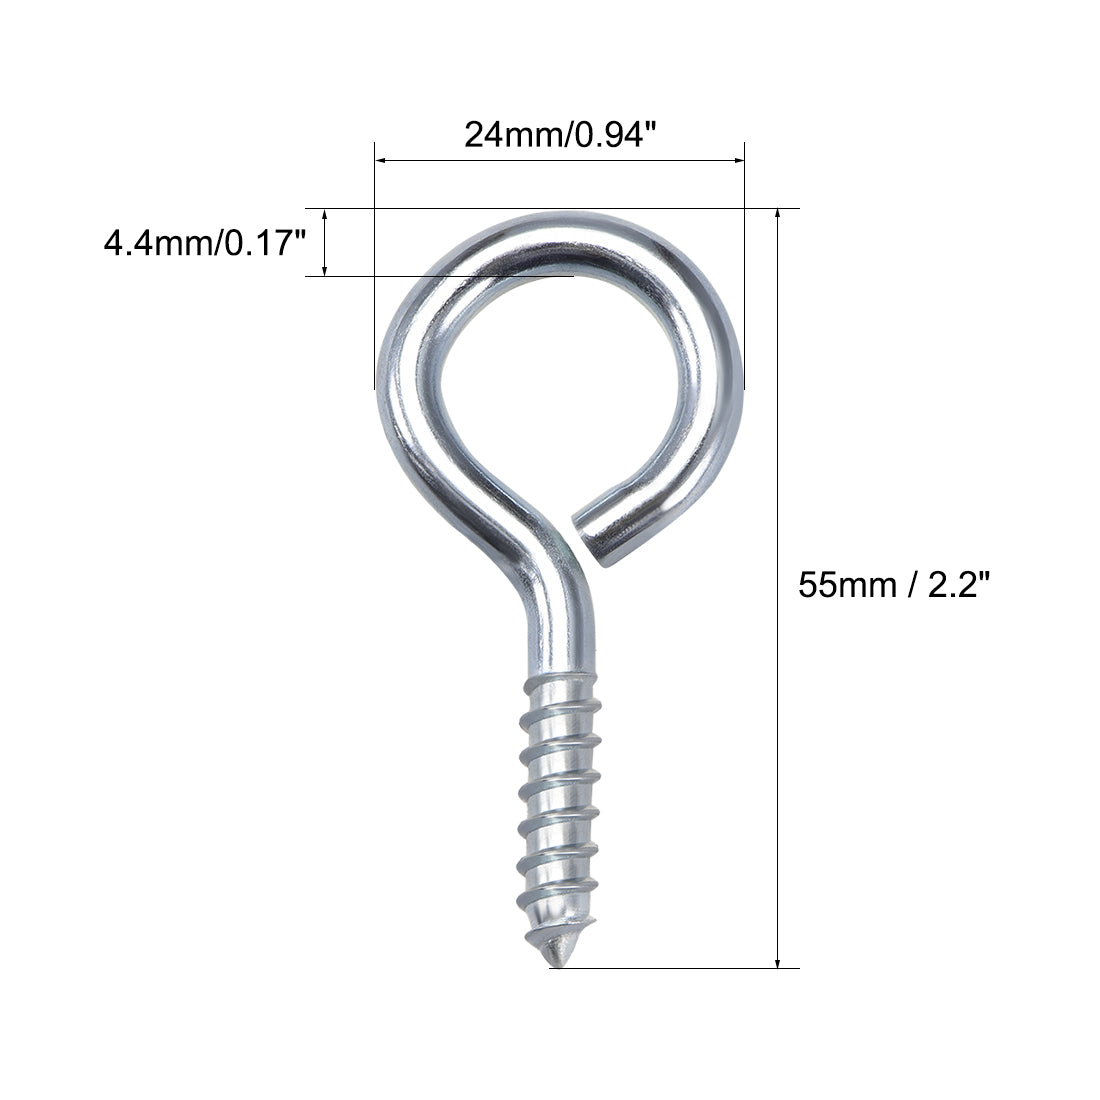 uxcell Uxcell 2.2" Screw Eye Hooks Self Tapping Screws Carbon Steel Screw-in Hanger Eye-Shape Ring Hooks 20pcs